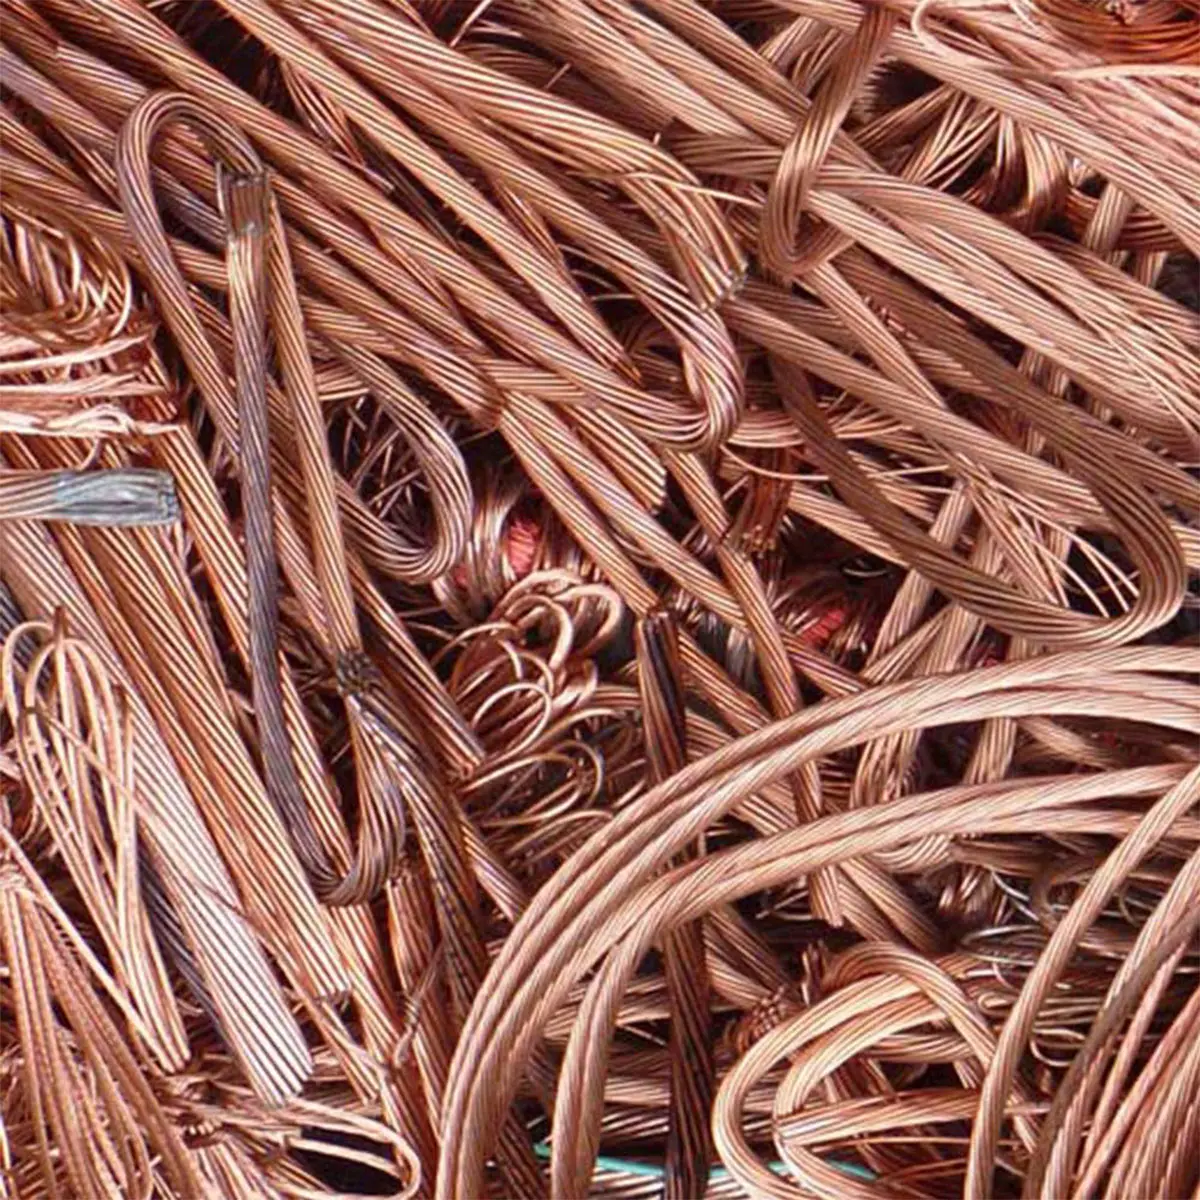 99.99% Copper Scraps pure millbery Copper Wire Scrap /Cooper Ingot /Scrap Copper Price Low Price